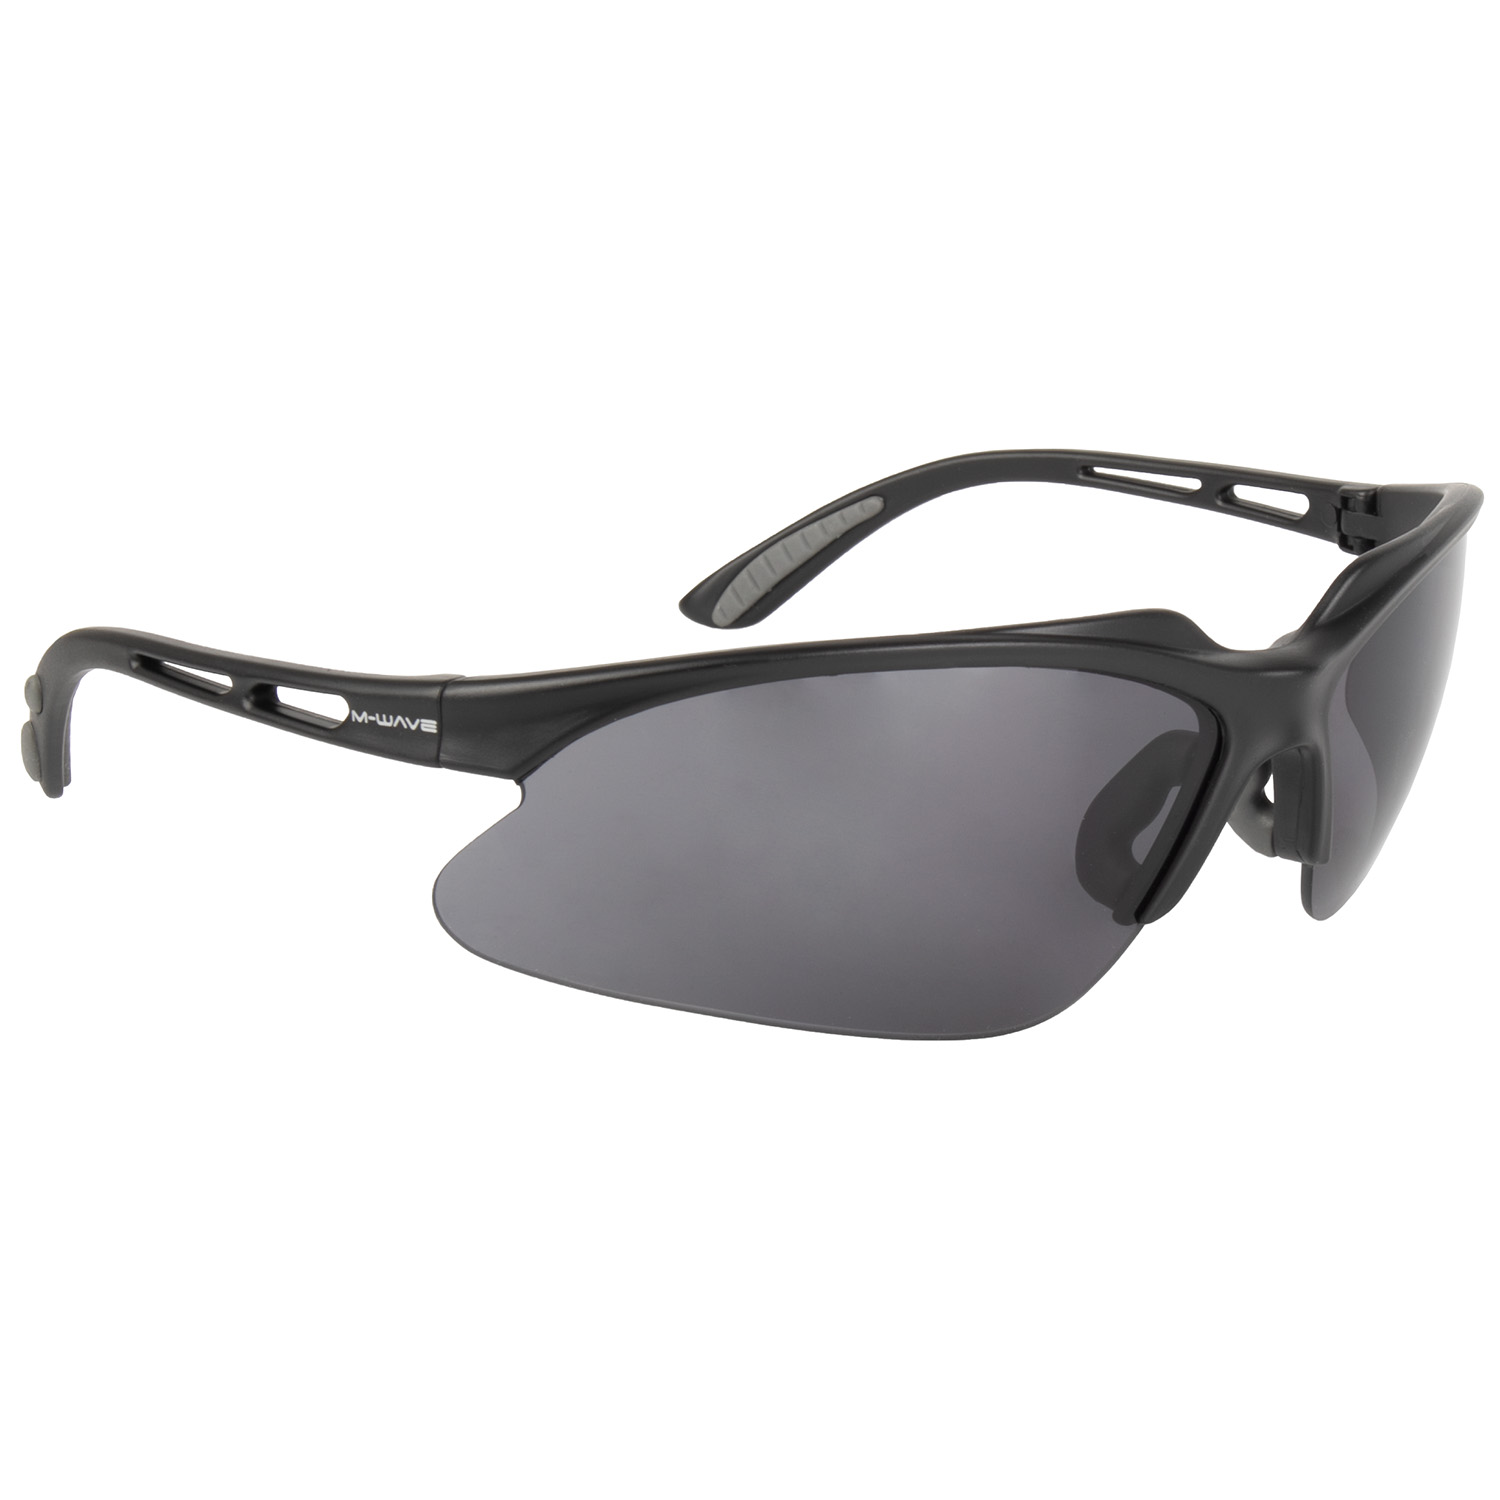 710167 M-WAVE Rayon Flexi 4 sports/bike eyewear – AVAILABLE IN SELECTED BIKE SHOPS